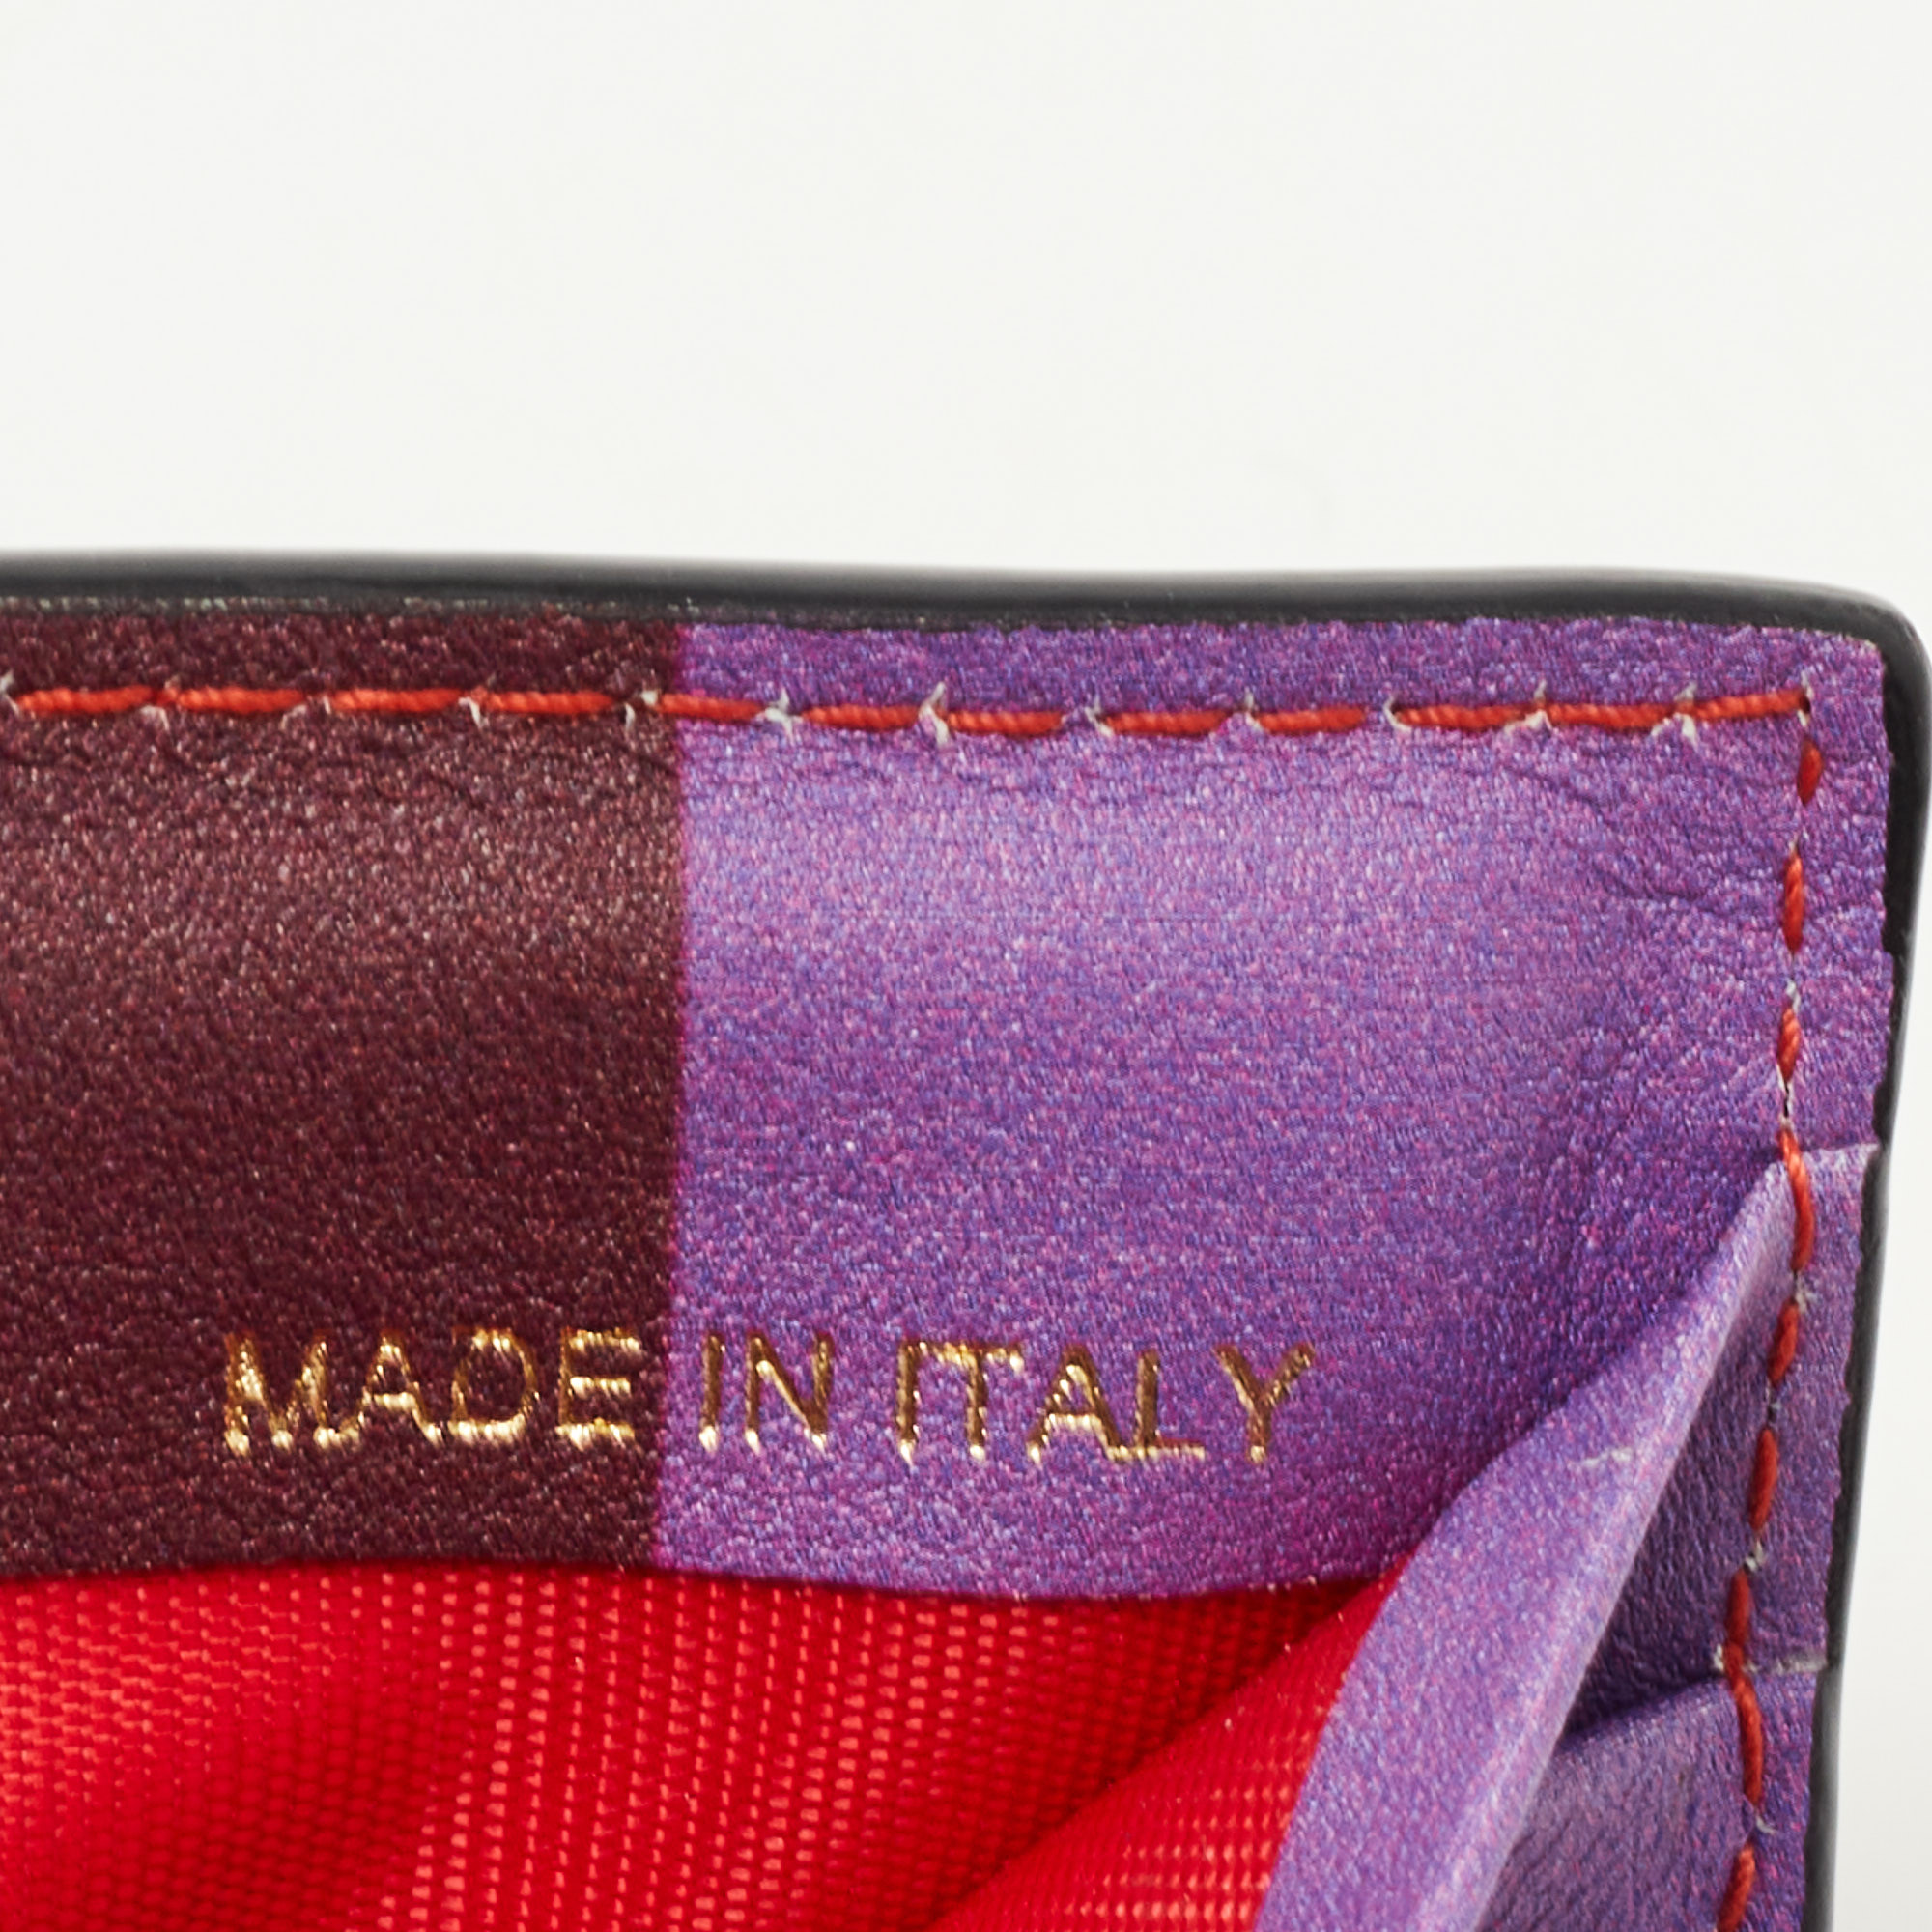 Valentino Multicolor Stripe Leather Rockstud Card Case